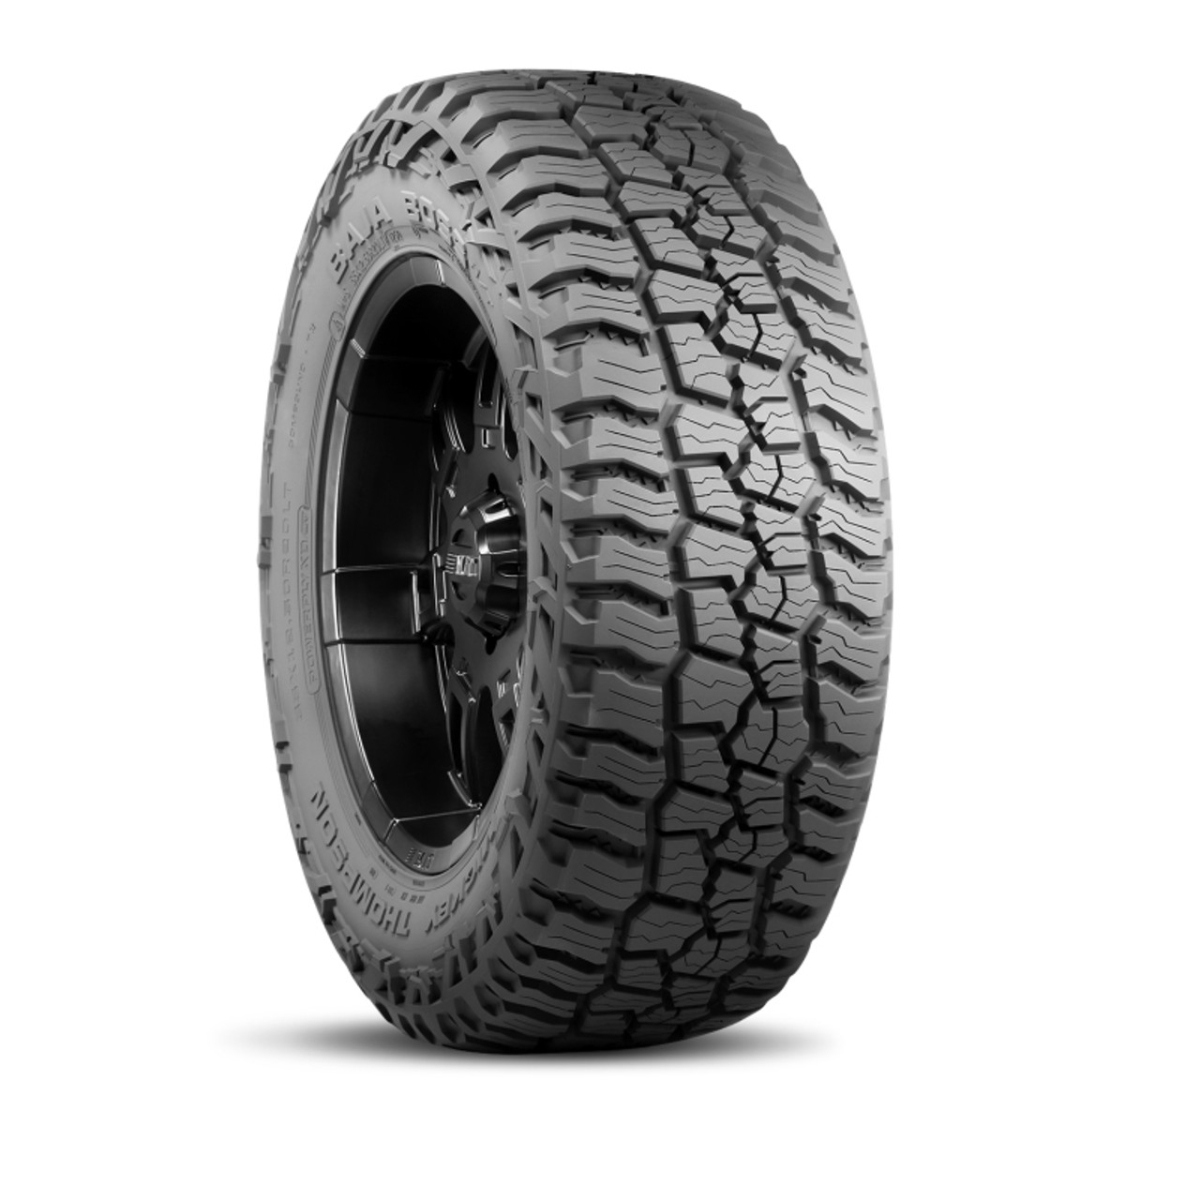 Picture of Mickey Thompson 36841 LT295-60R20 126-123Q Baja Boss Asymmetric Tread Tire